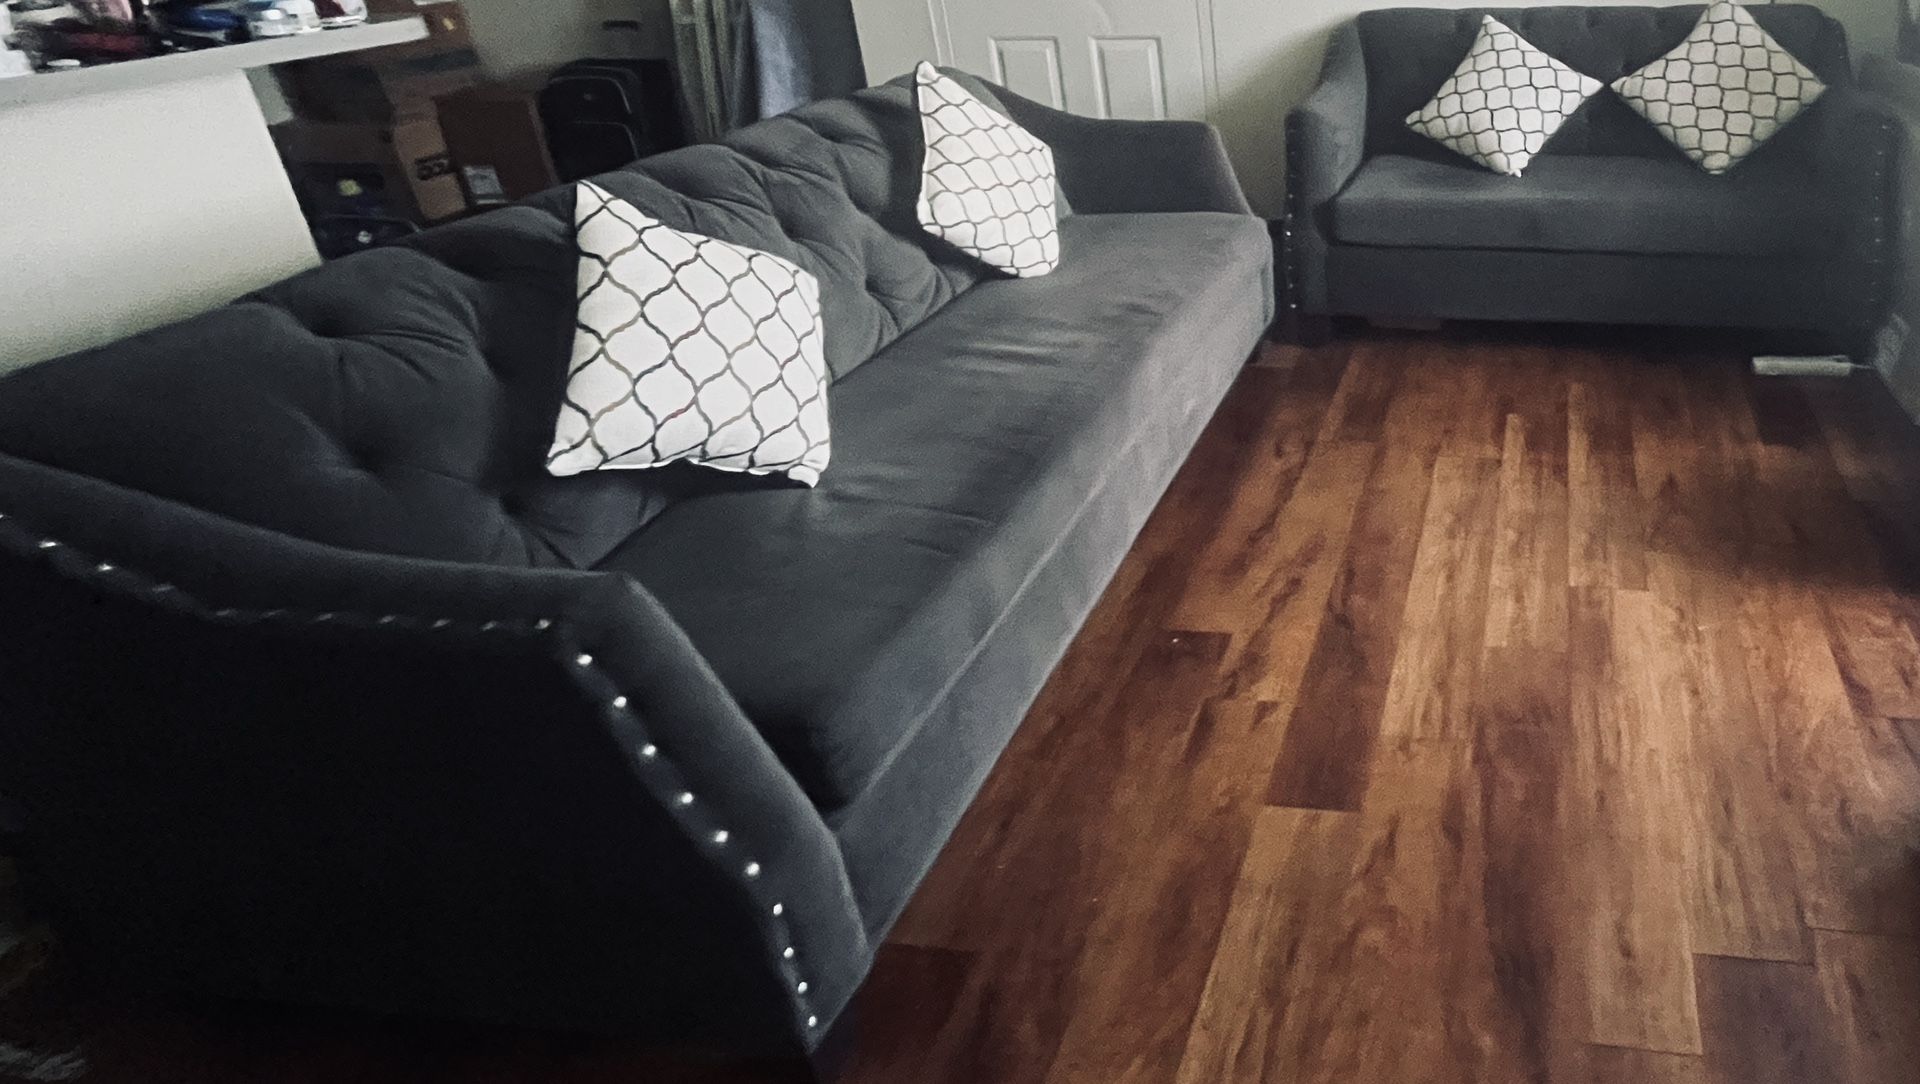 New Sofa And Loveseat Set Originally $2200/Asking $1500 Obo